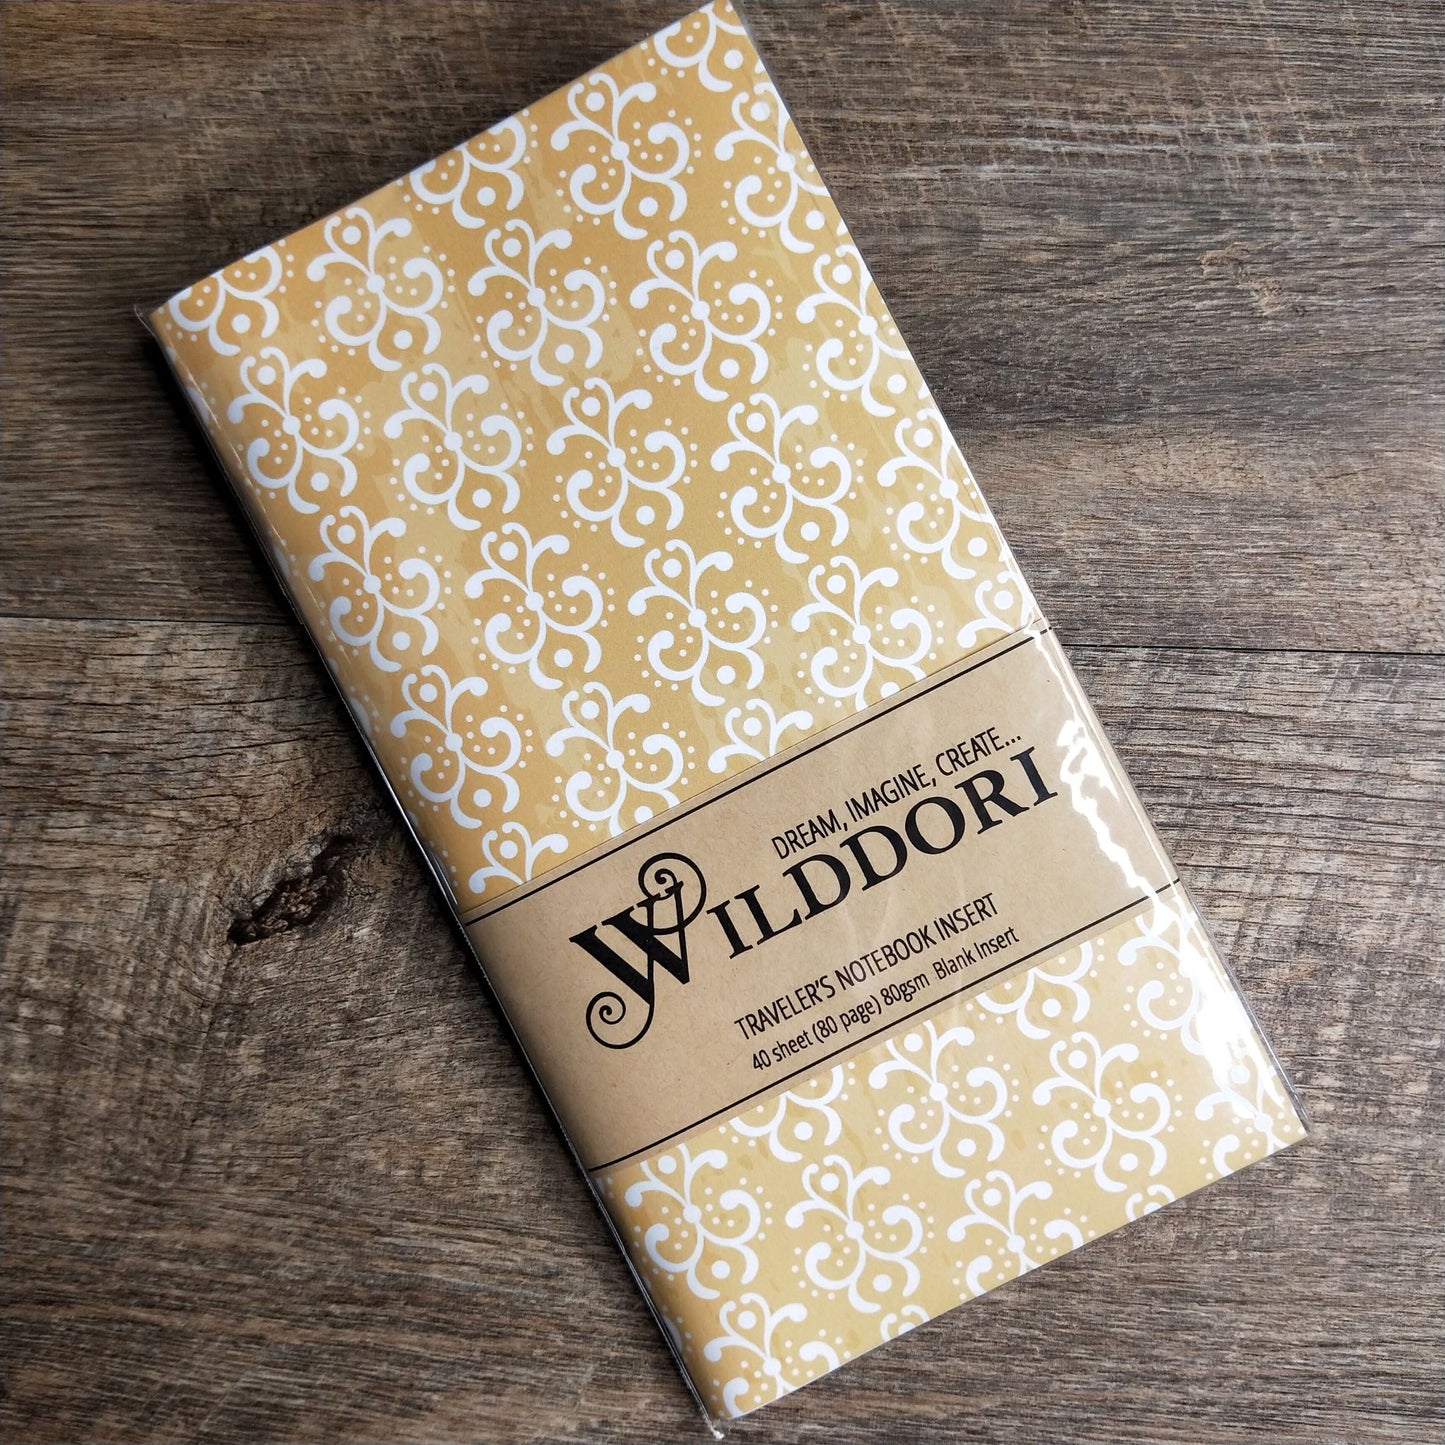 Wilddori 40 sheet Blank Insert - Mustard Swirl